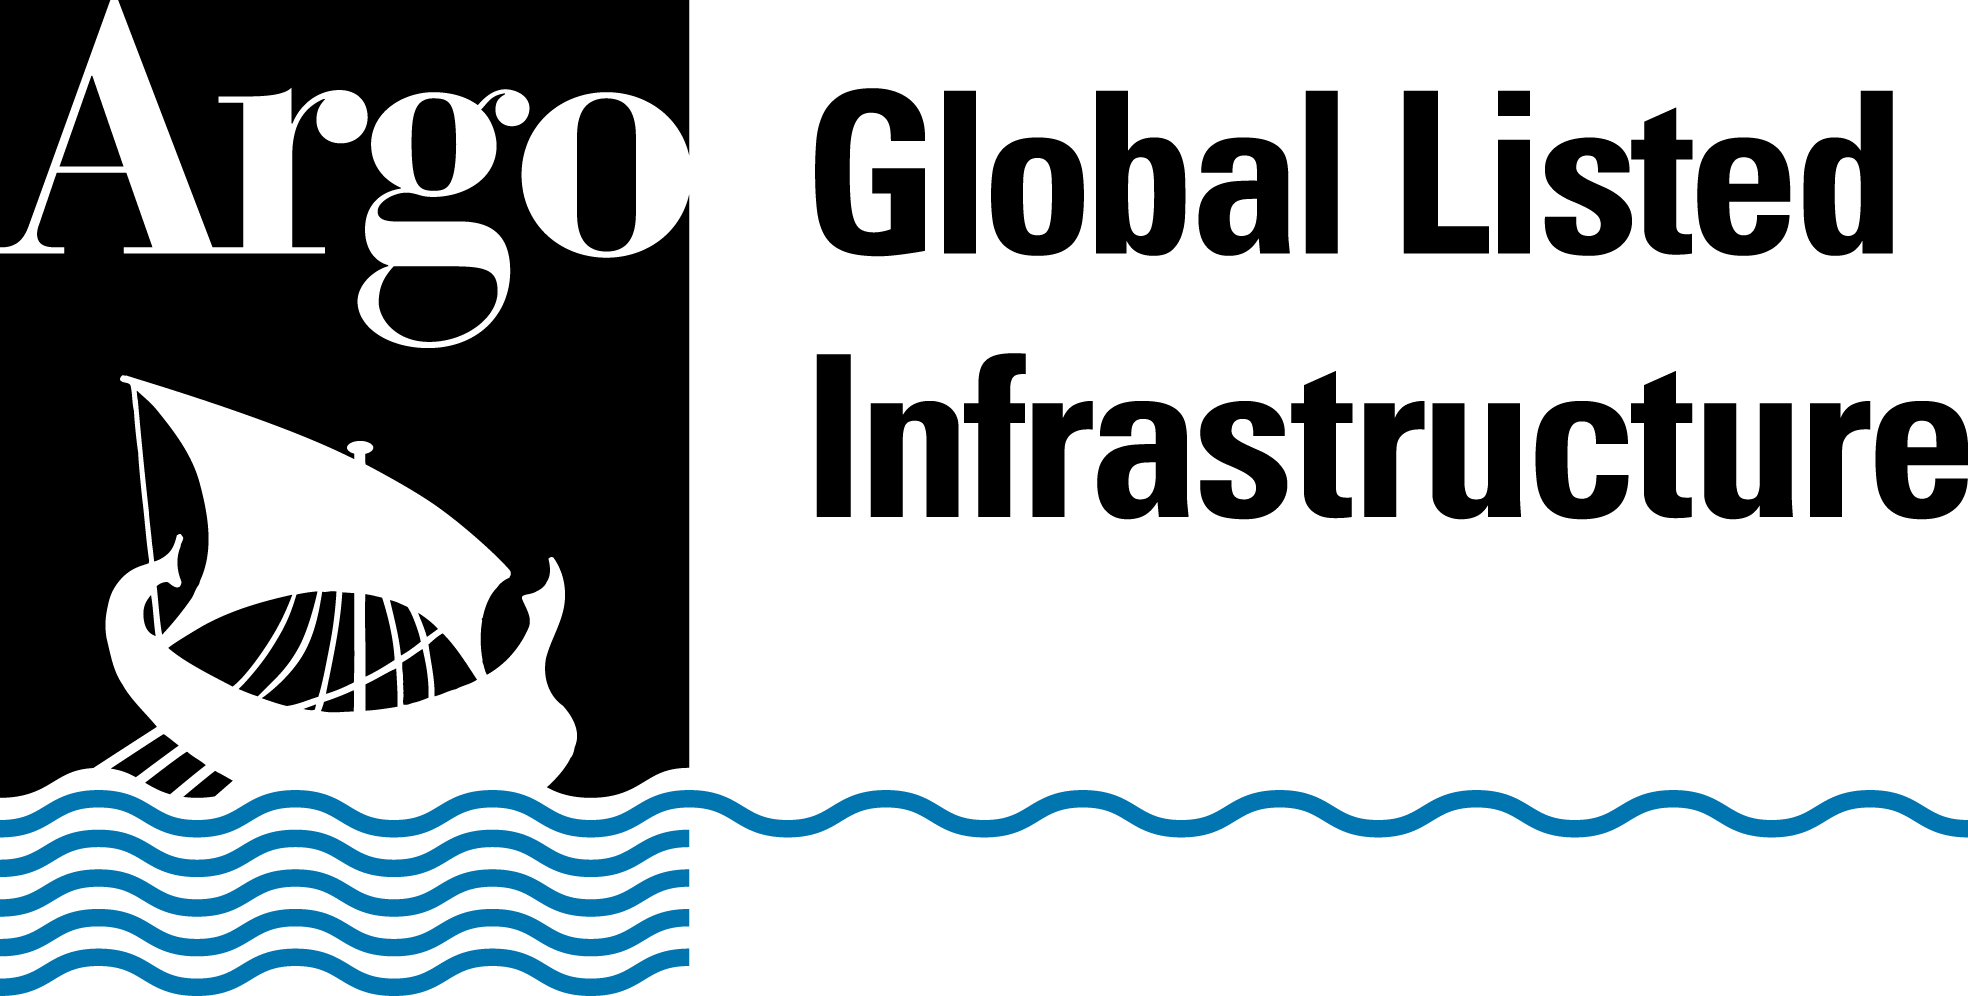 Argo Global Listed Infrastructure Limited Logo